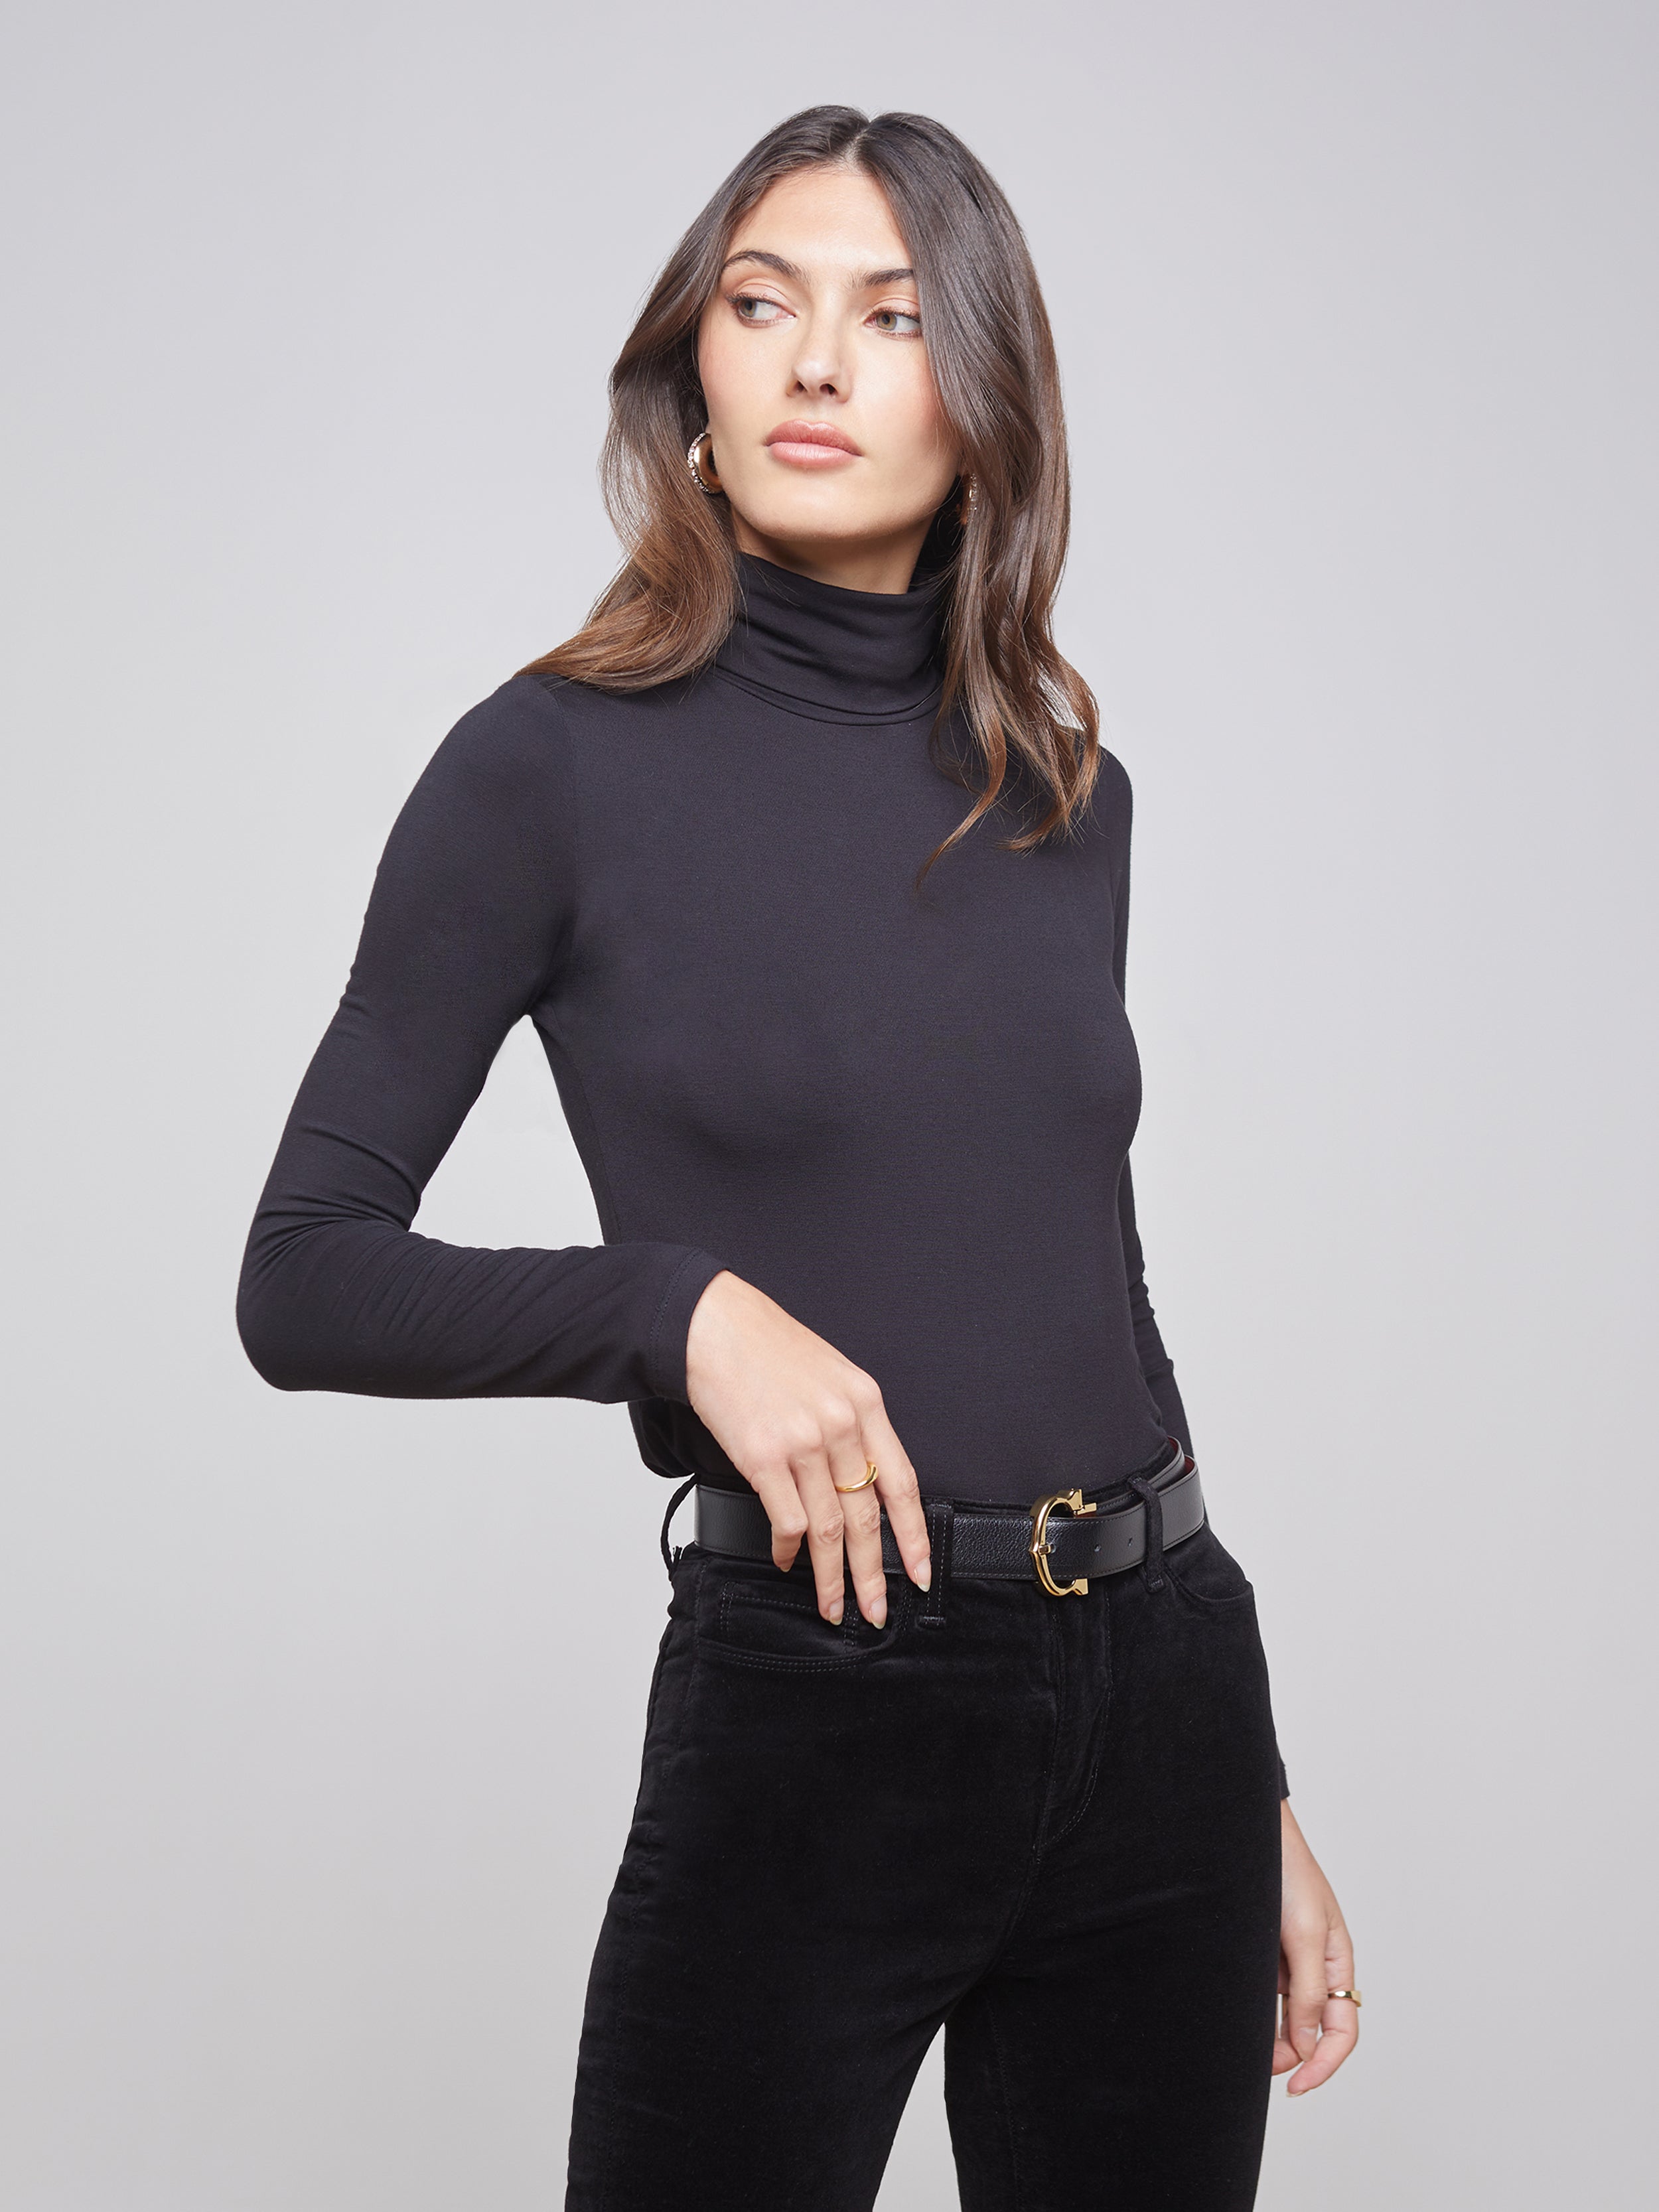 Women's Black Long Sleeve Turtleneck (Tailored Fit) - Fallon & Ava